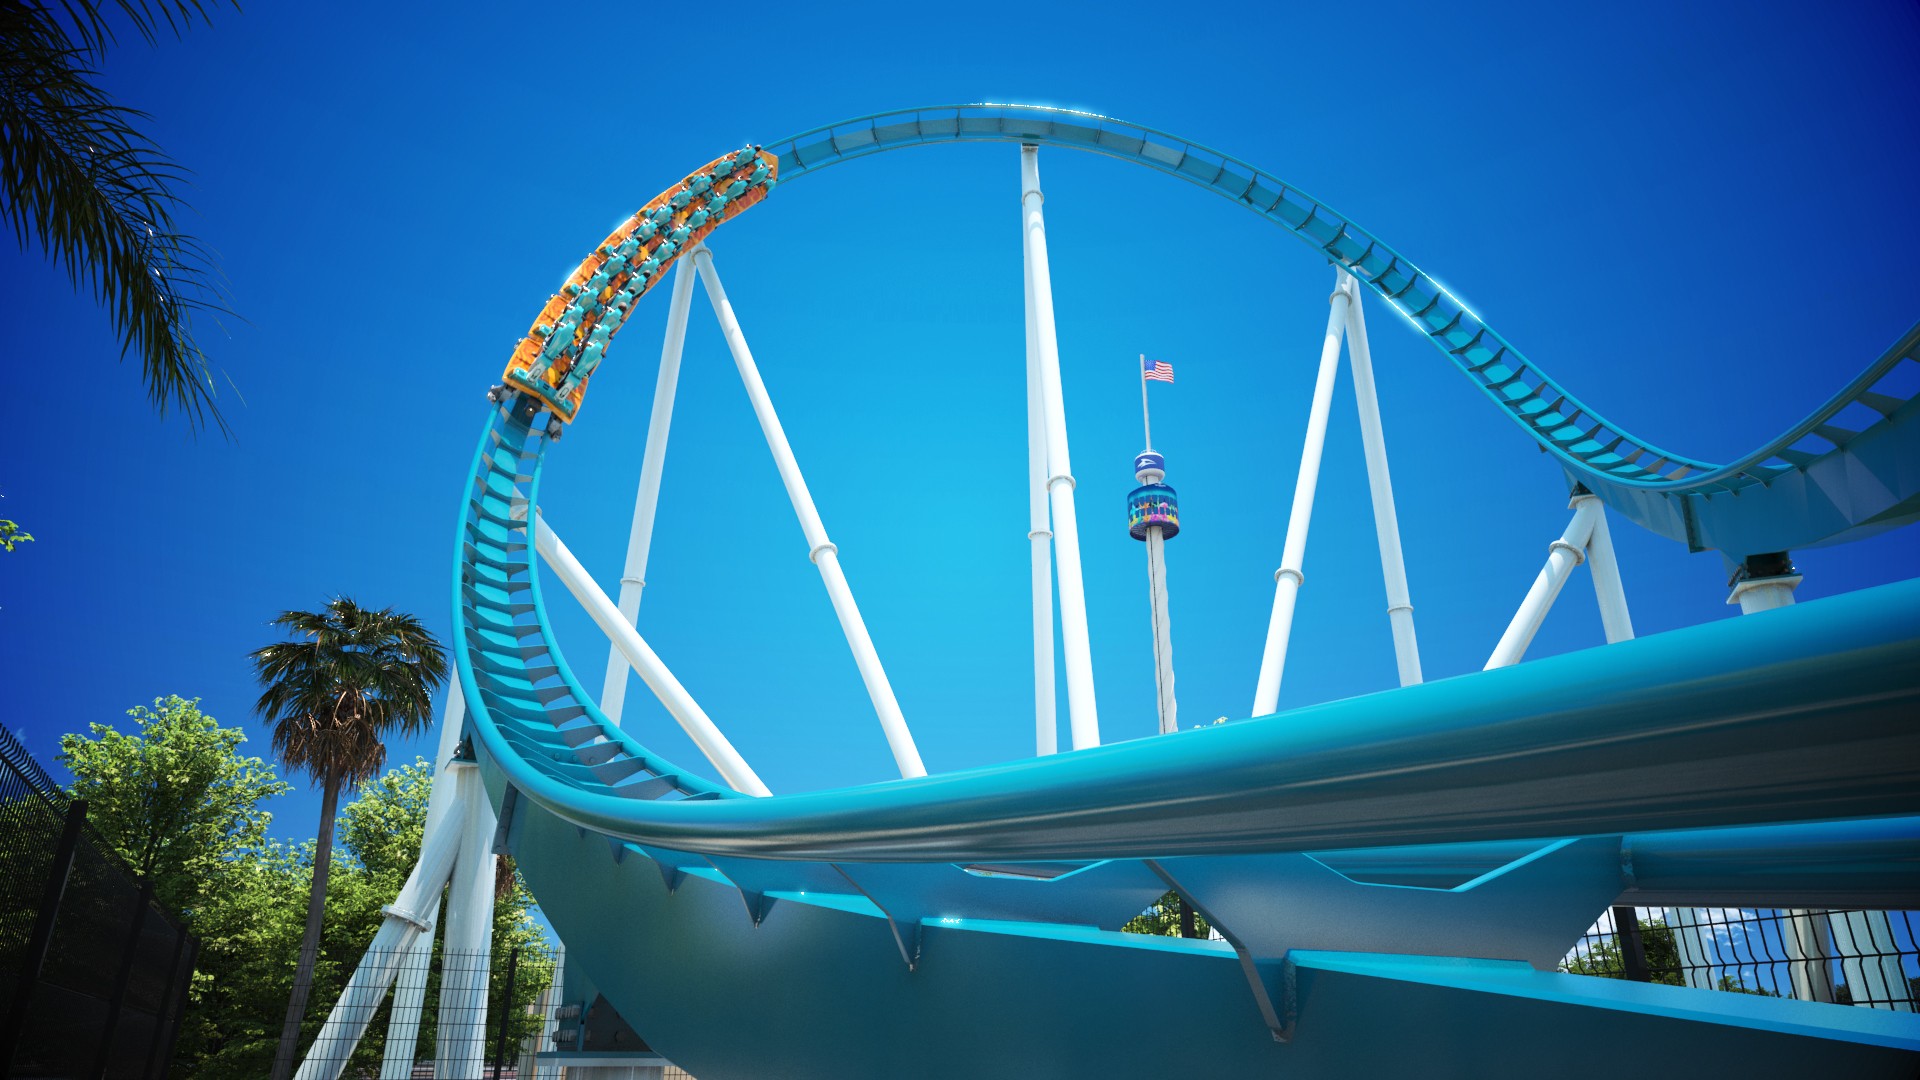 SeaWorld announces new roller coaster for 2020 